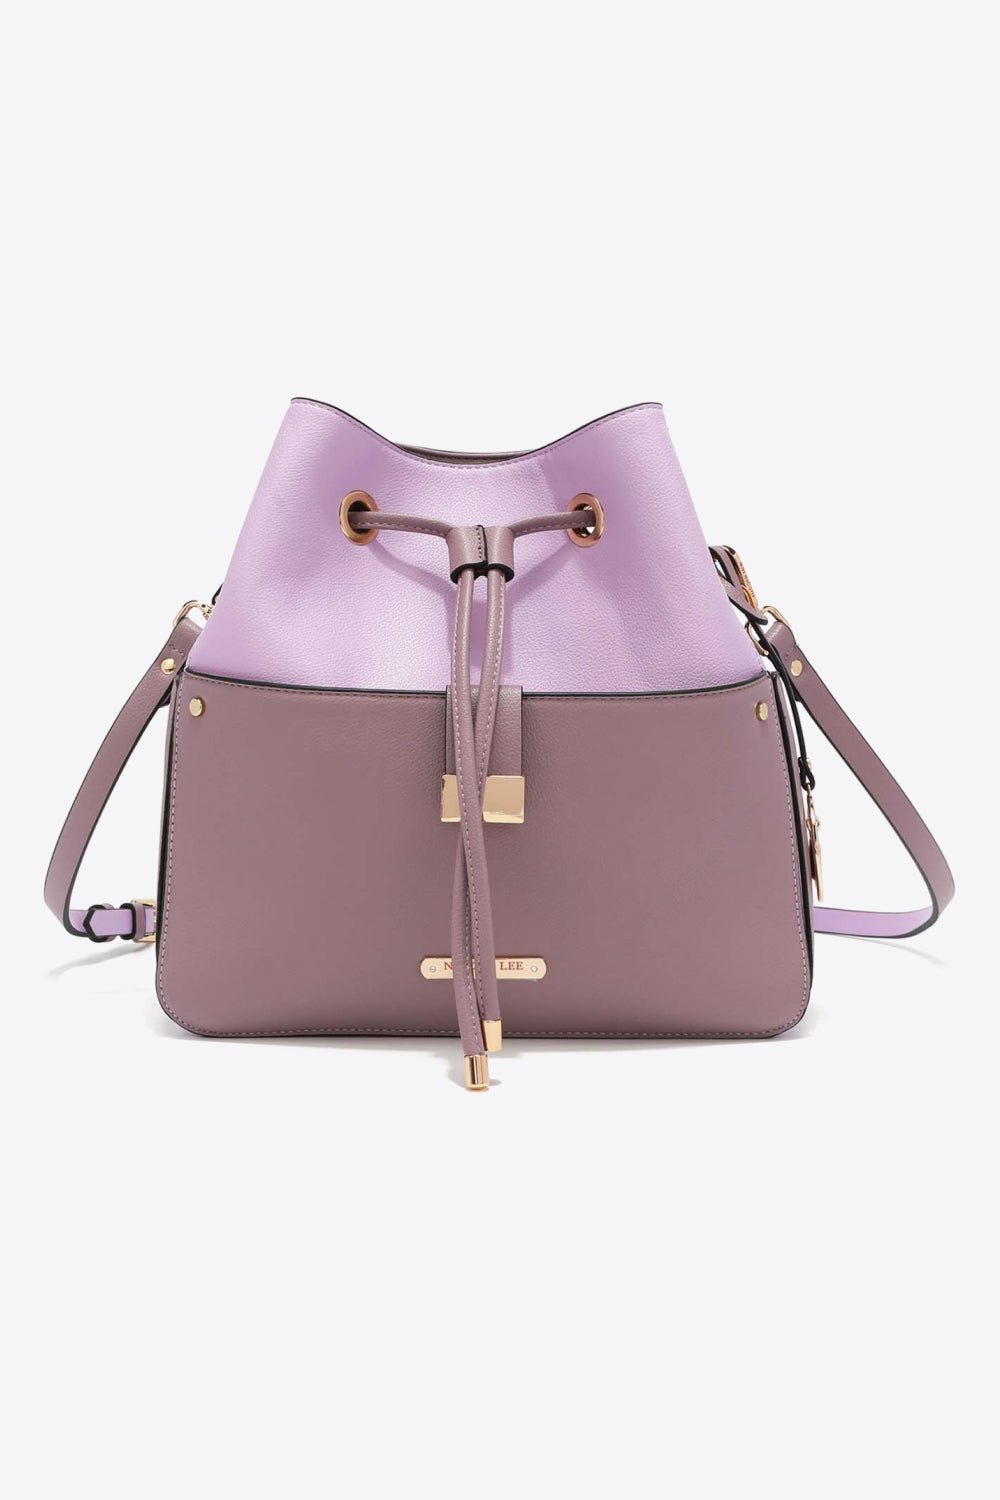 Nicole Lee USA Gemma Bucket Bag - Fashion Girl Online Store